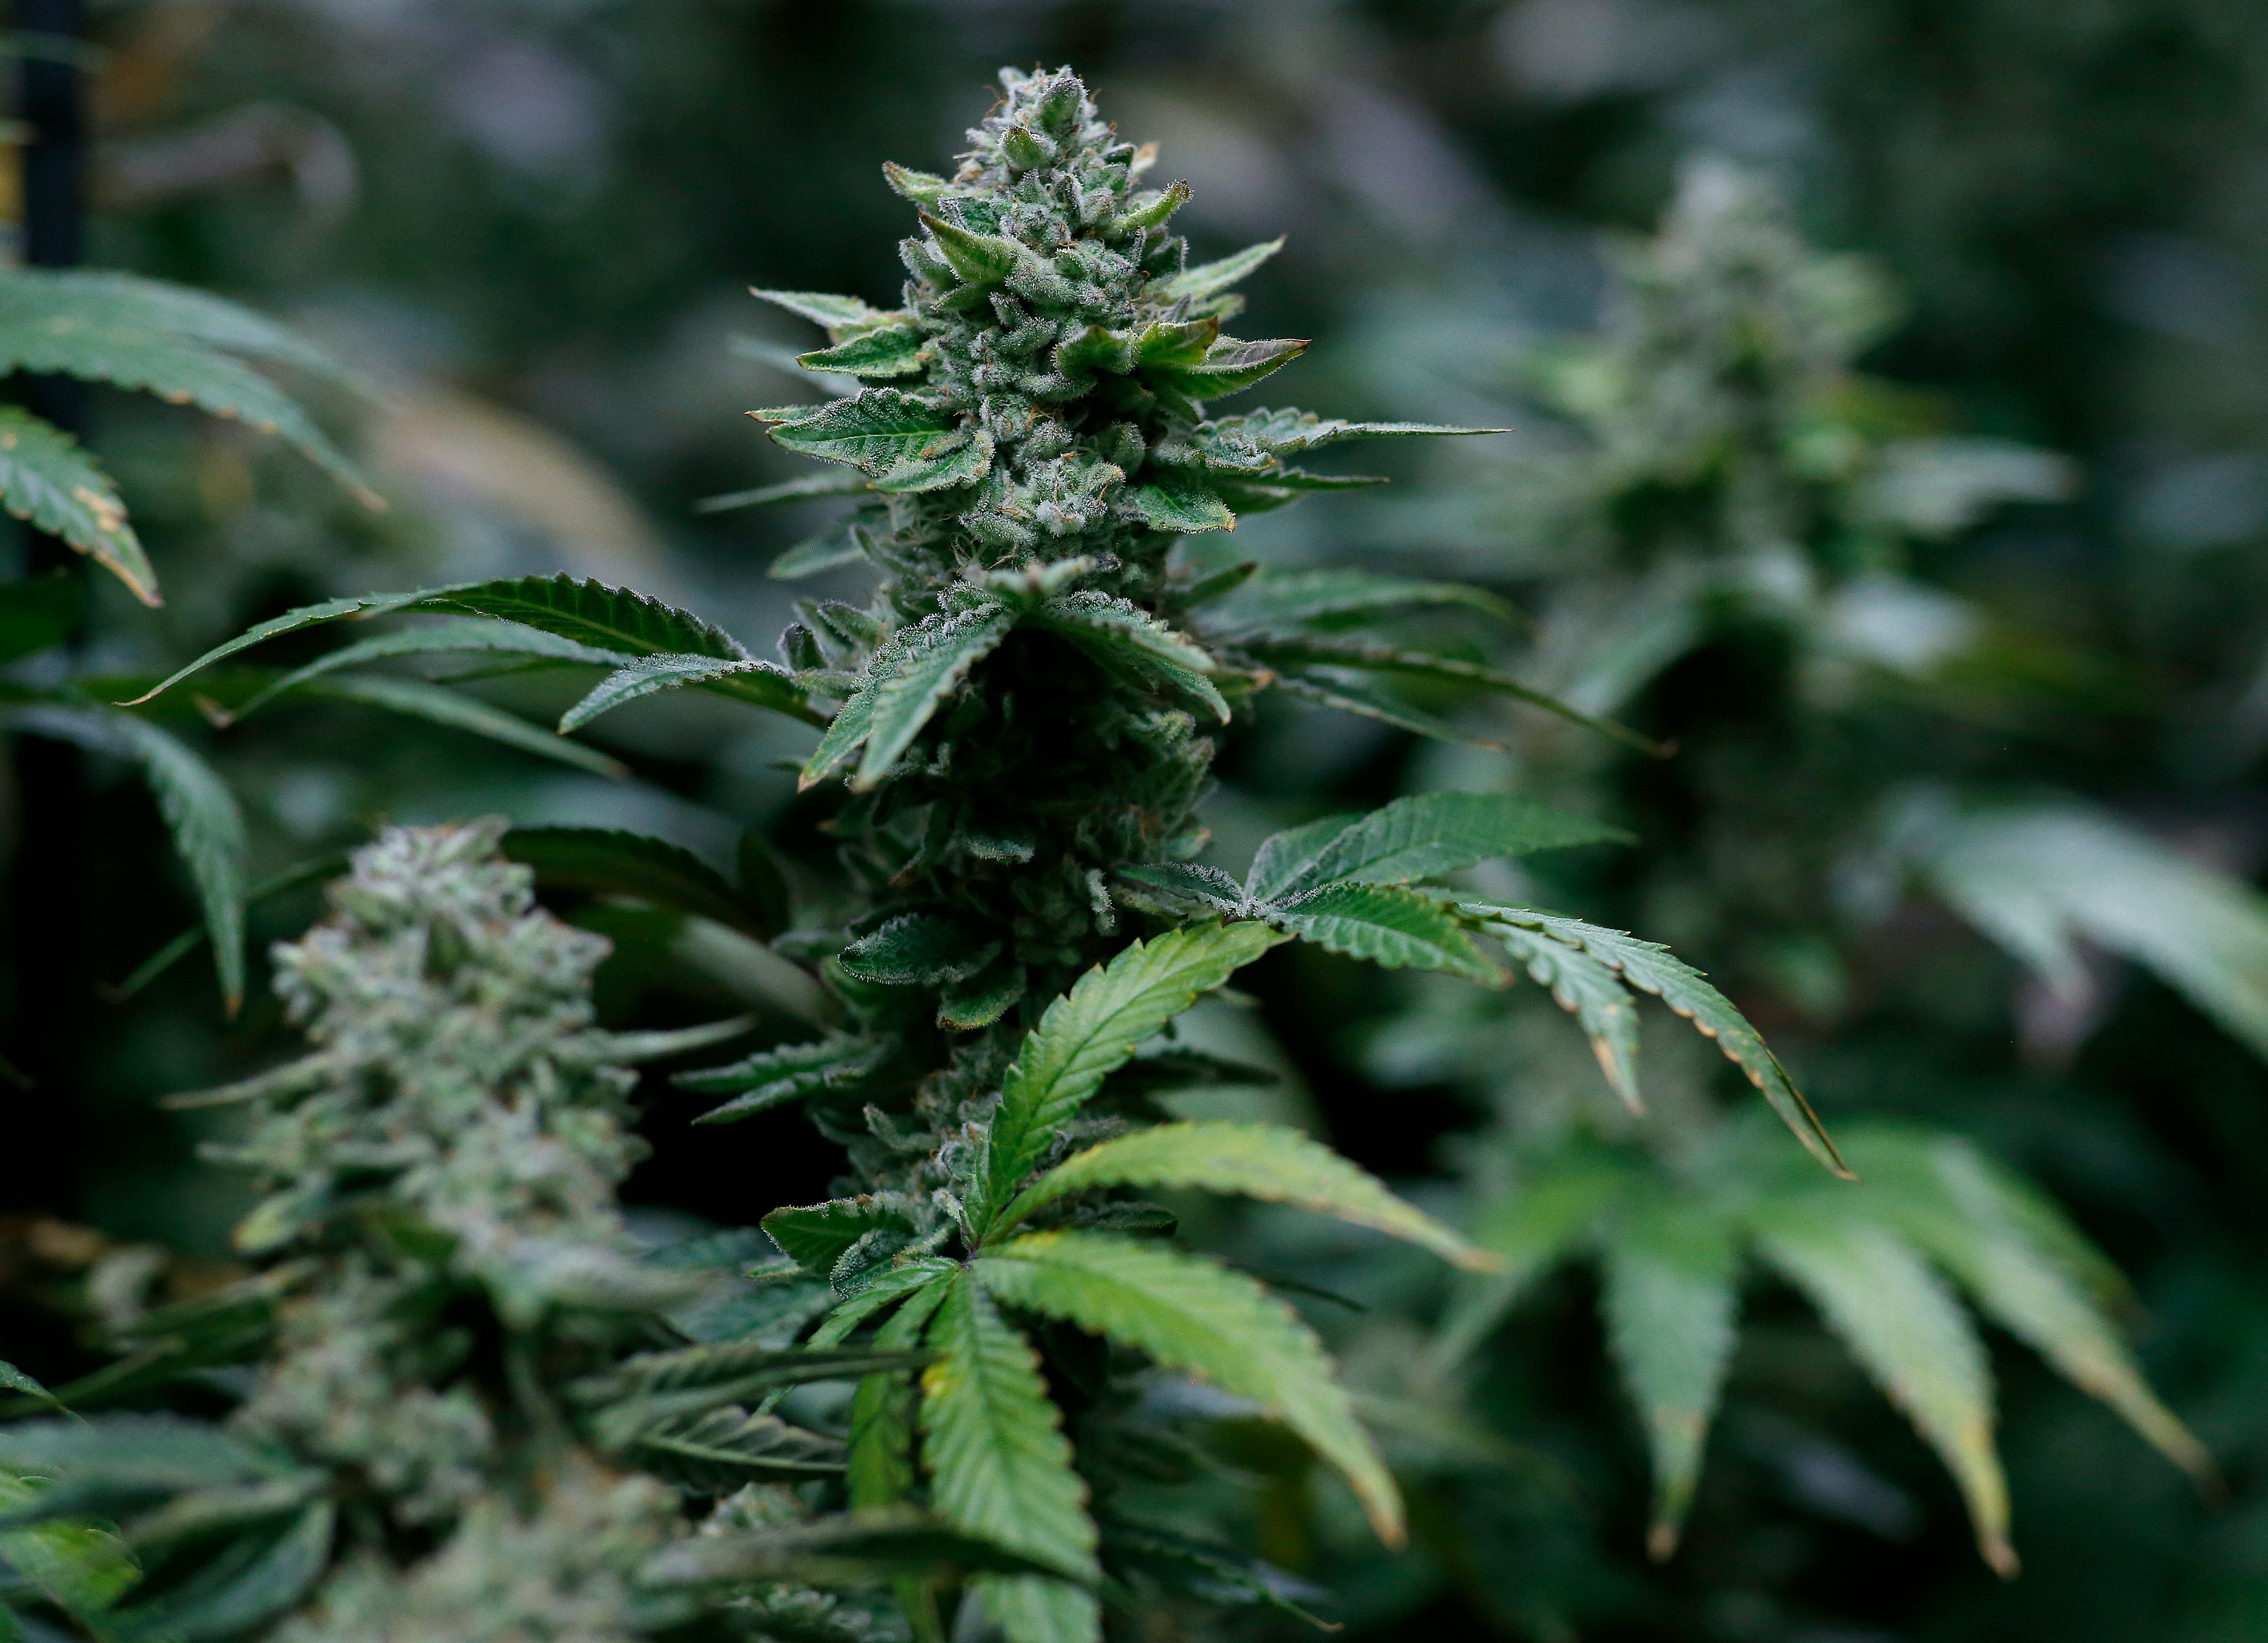 How to grow a marijuana plant indoors